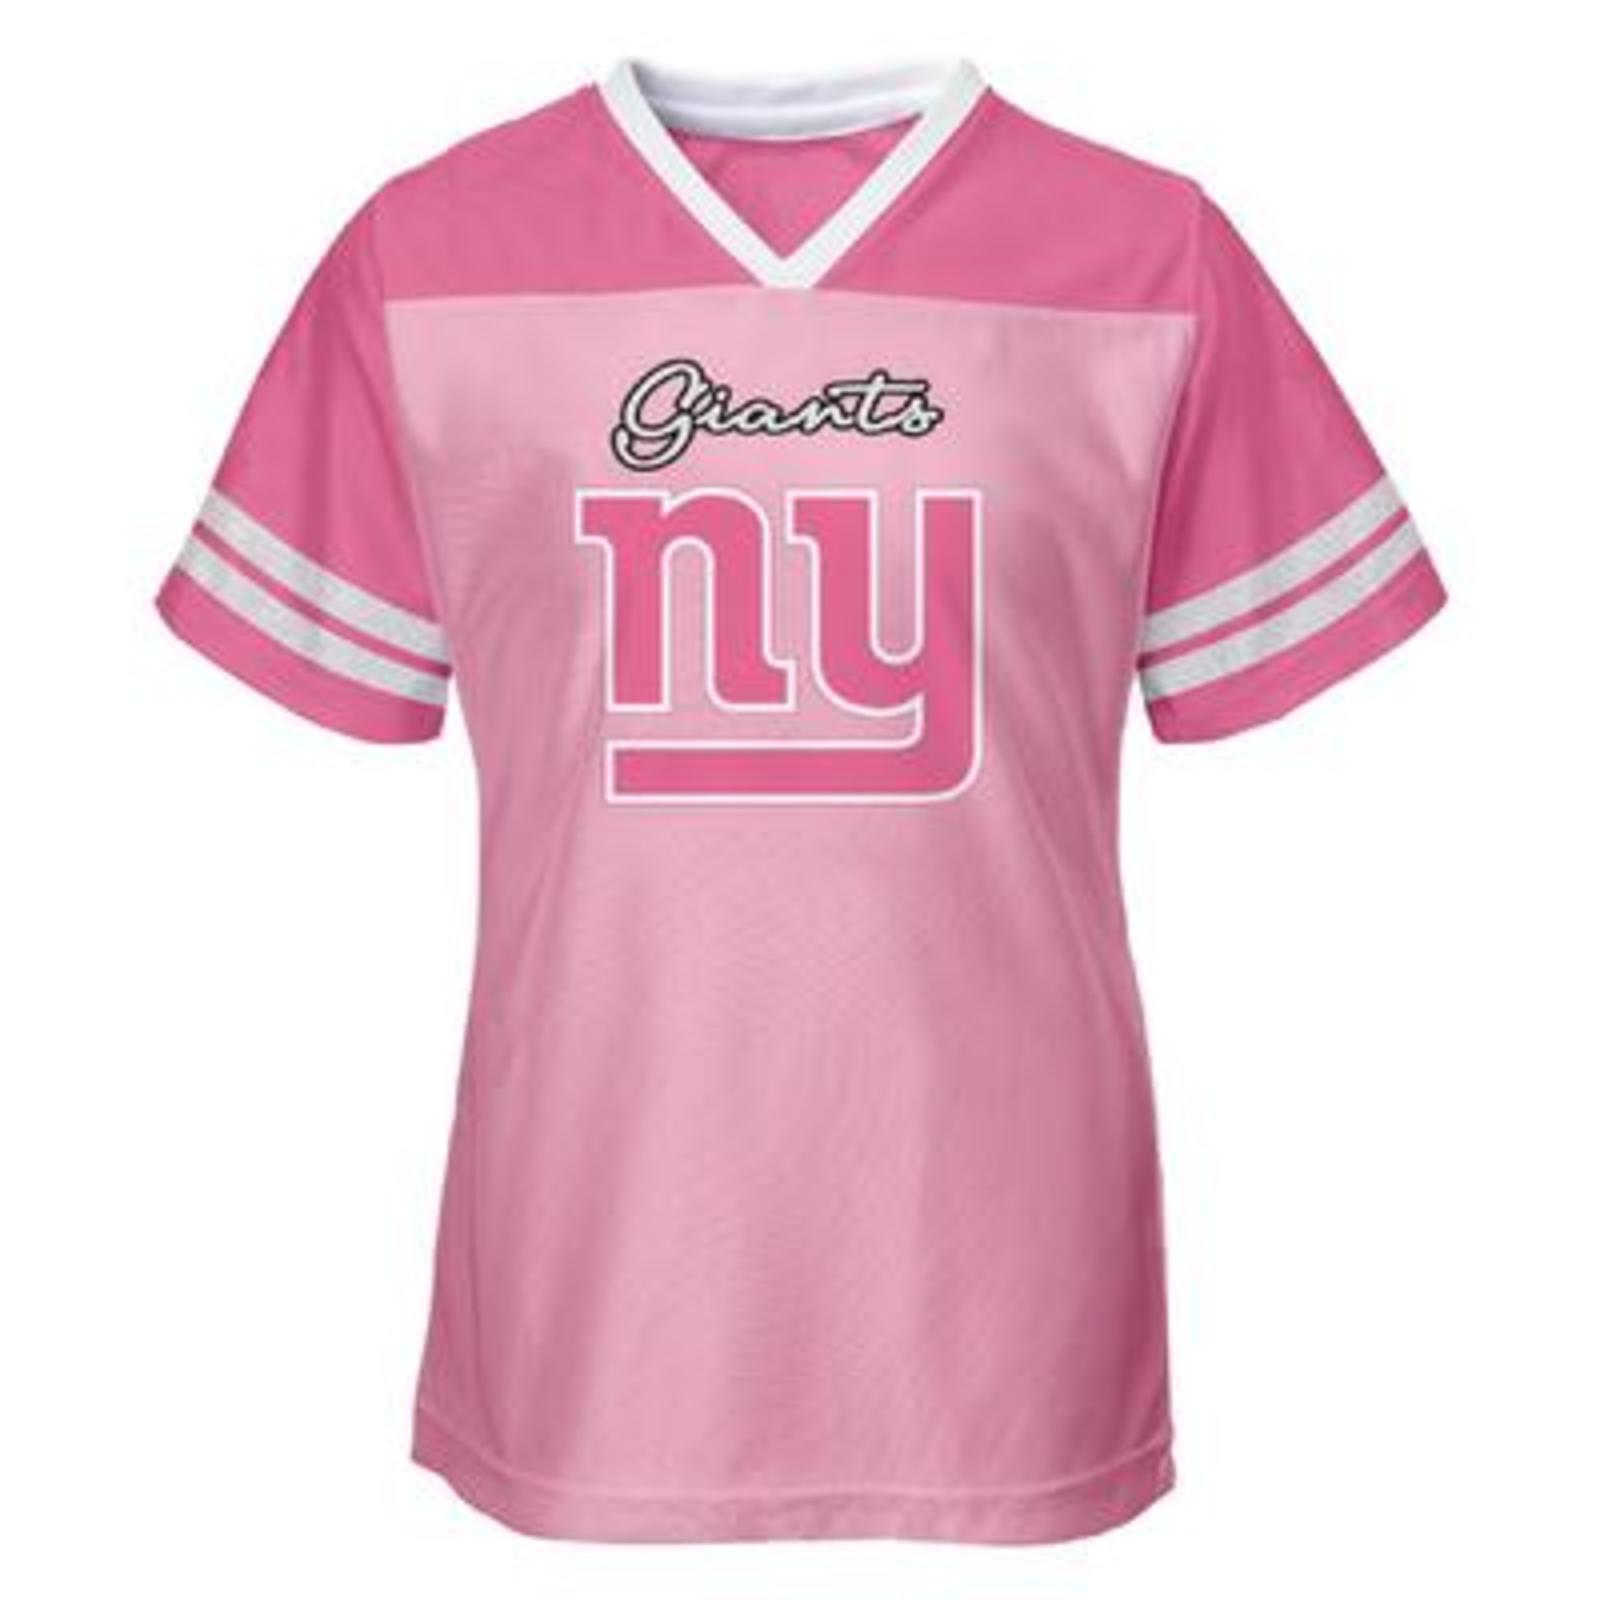 NFL Toddler Girls' Jersey Shirt - New York Giants